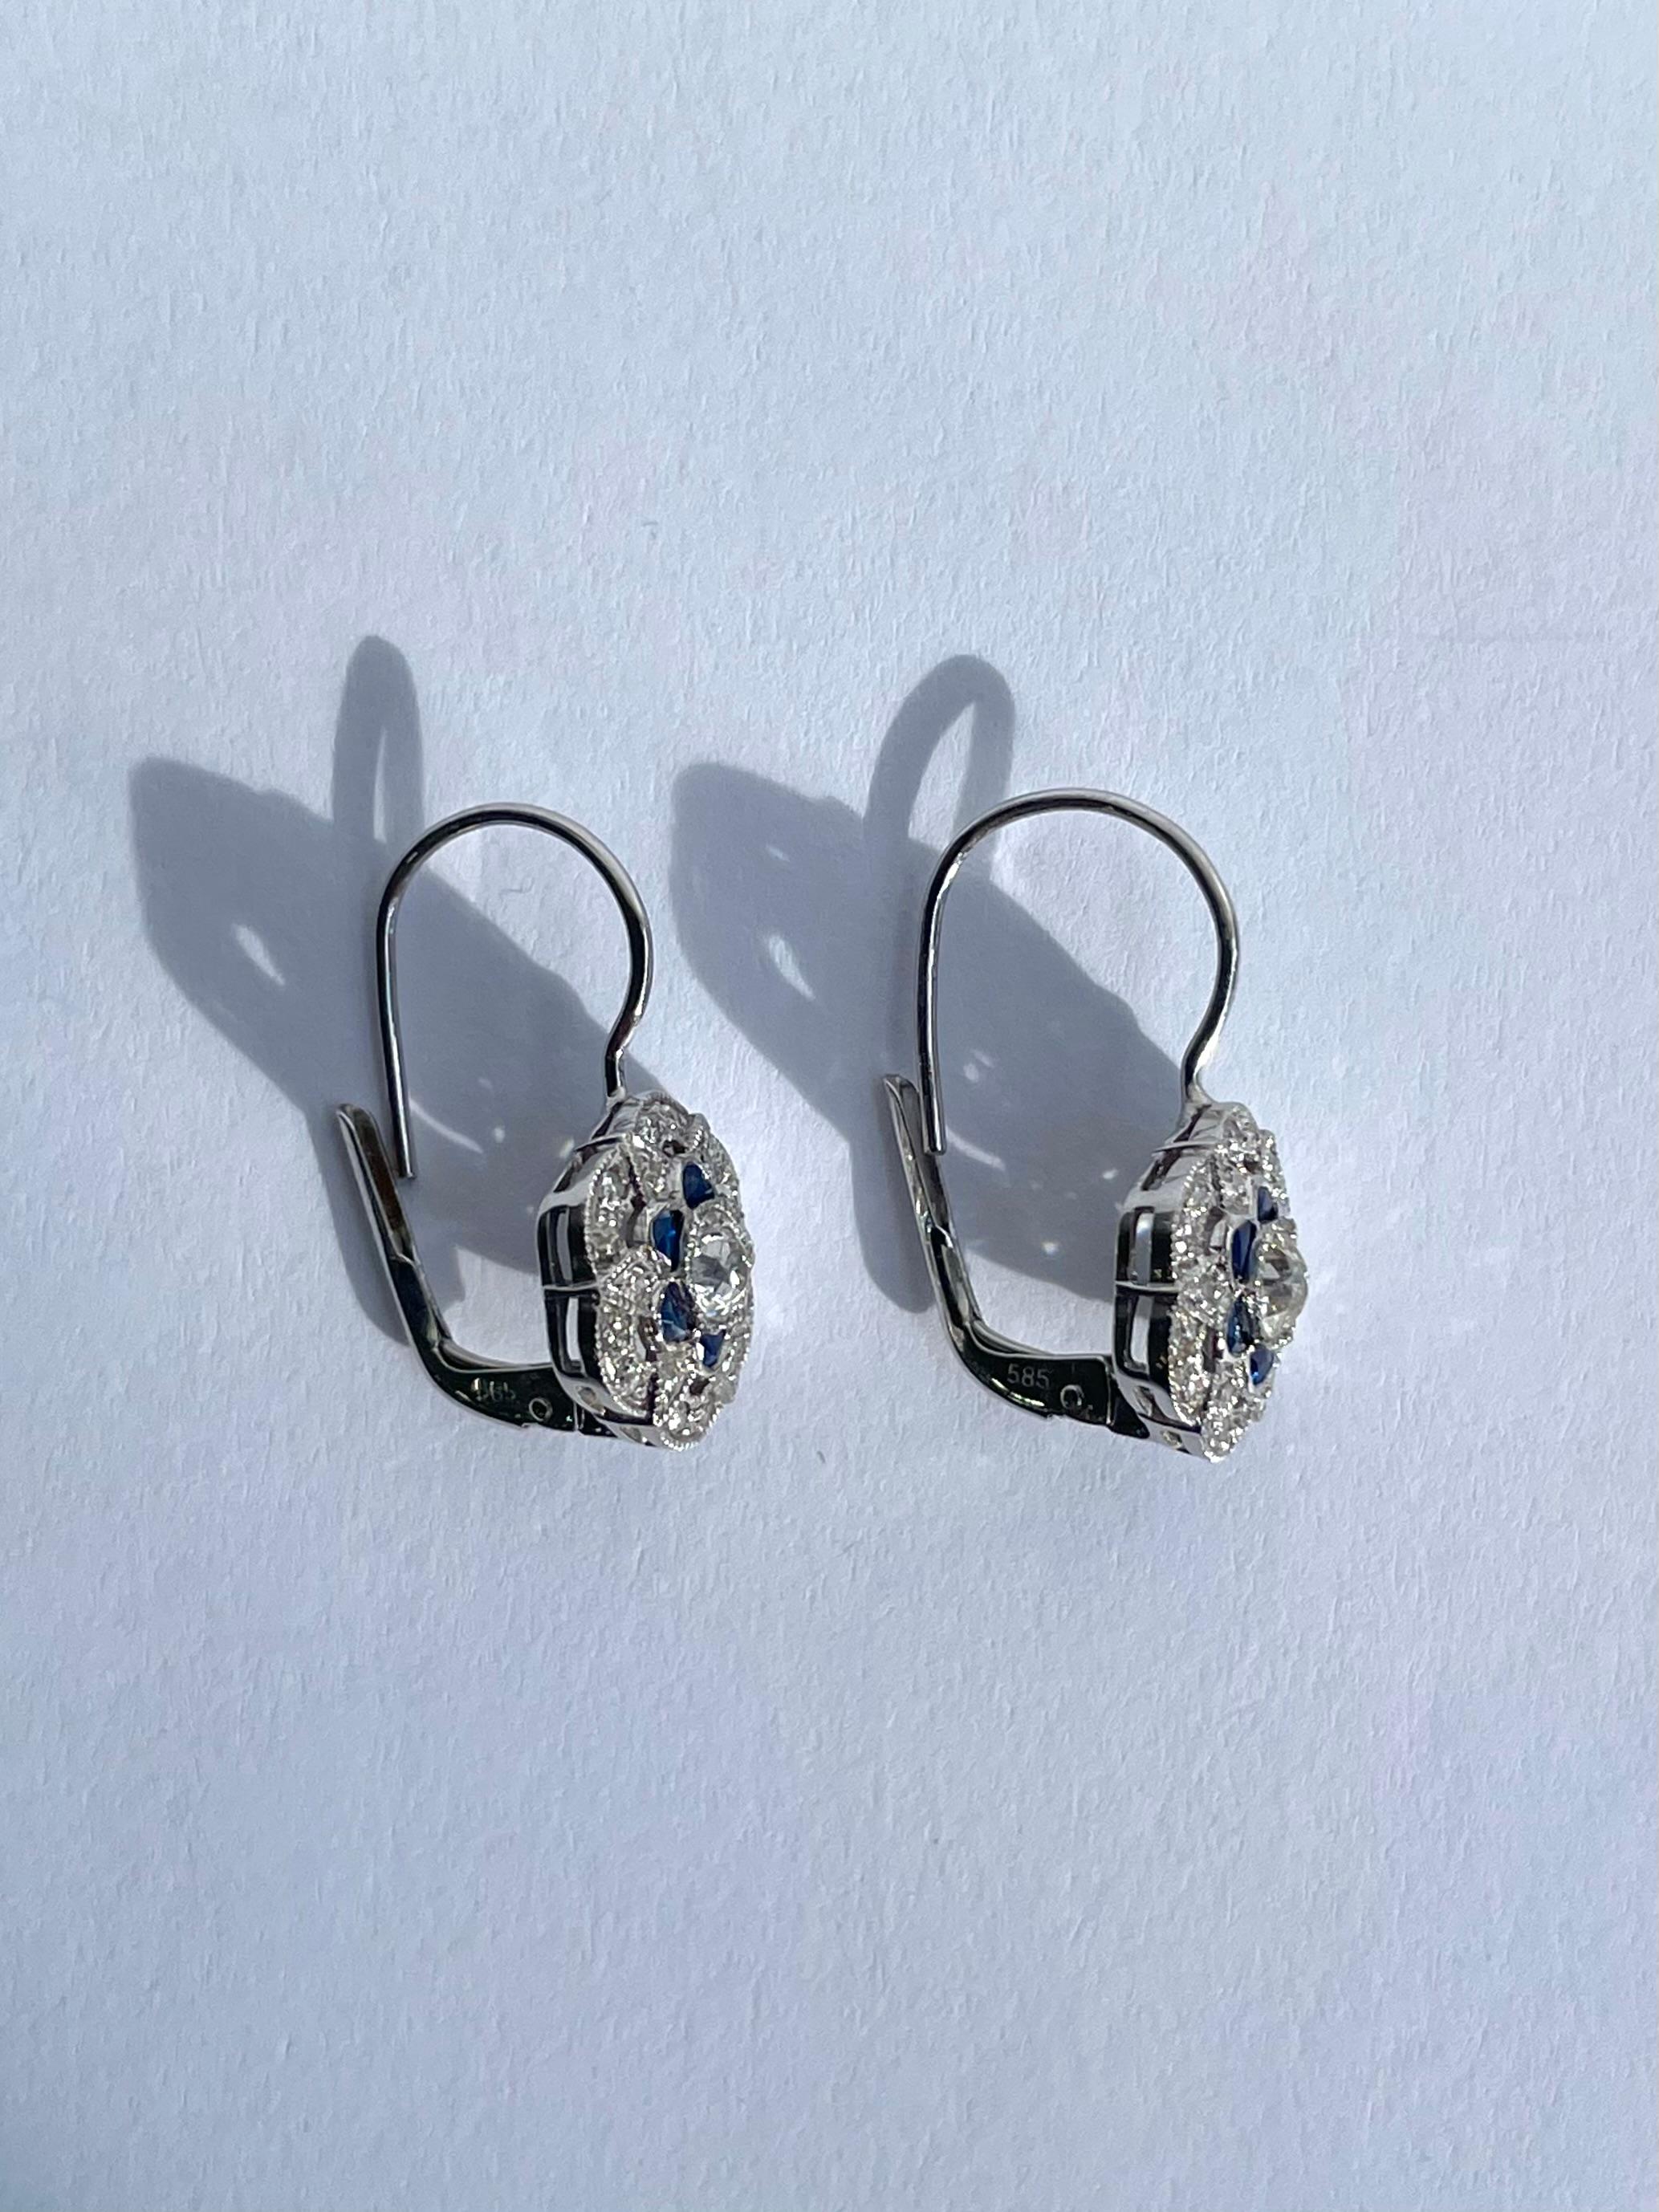 Art Deco Style Diamond & Sapphire Flower Motif Earrings in 14K White Gold In Good Condition For Sale In Boston, MA